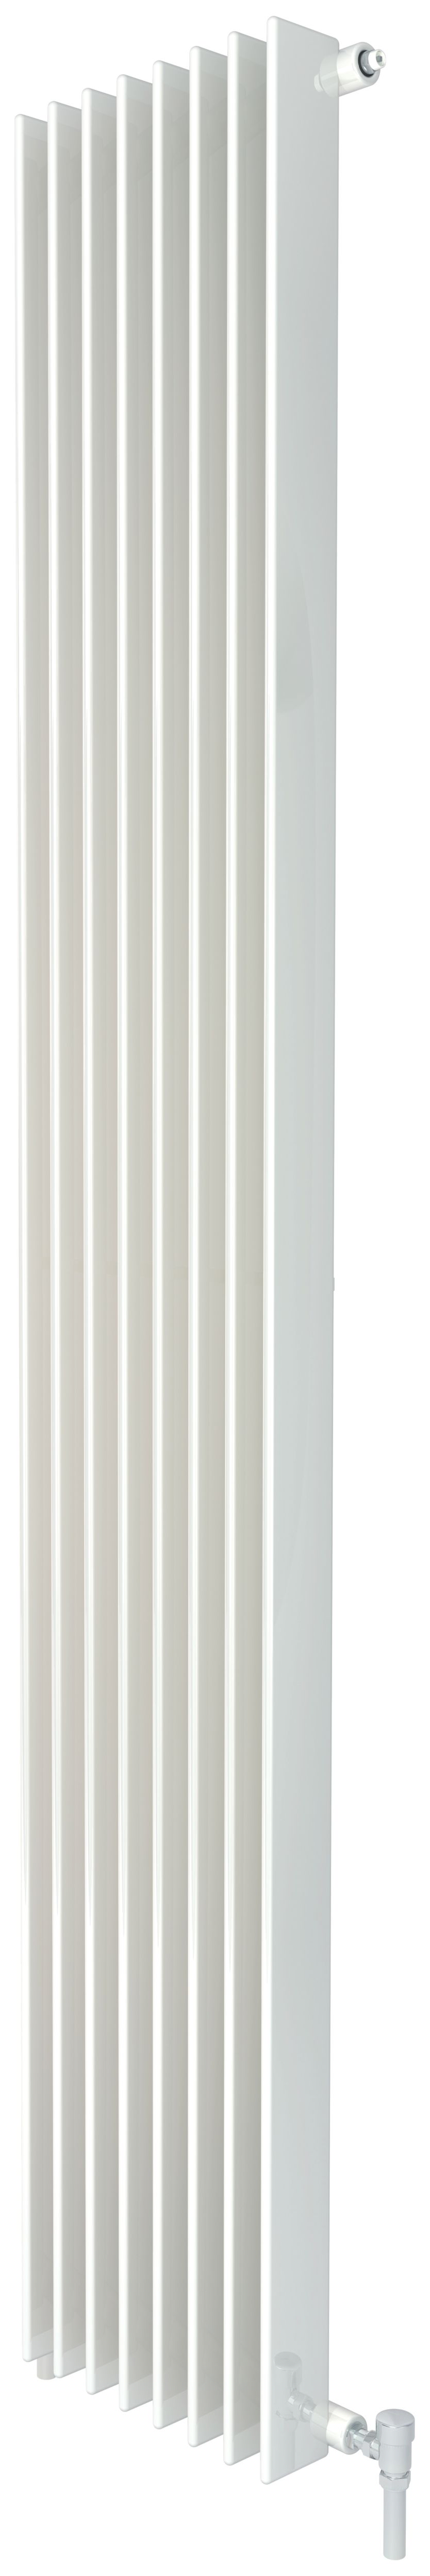 Image of Henrad Verona Slim Single Panel Vertical Designer Radiator - White 1800 x 440 mm